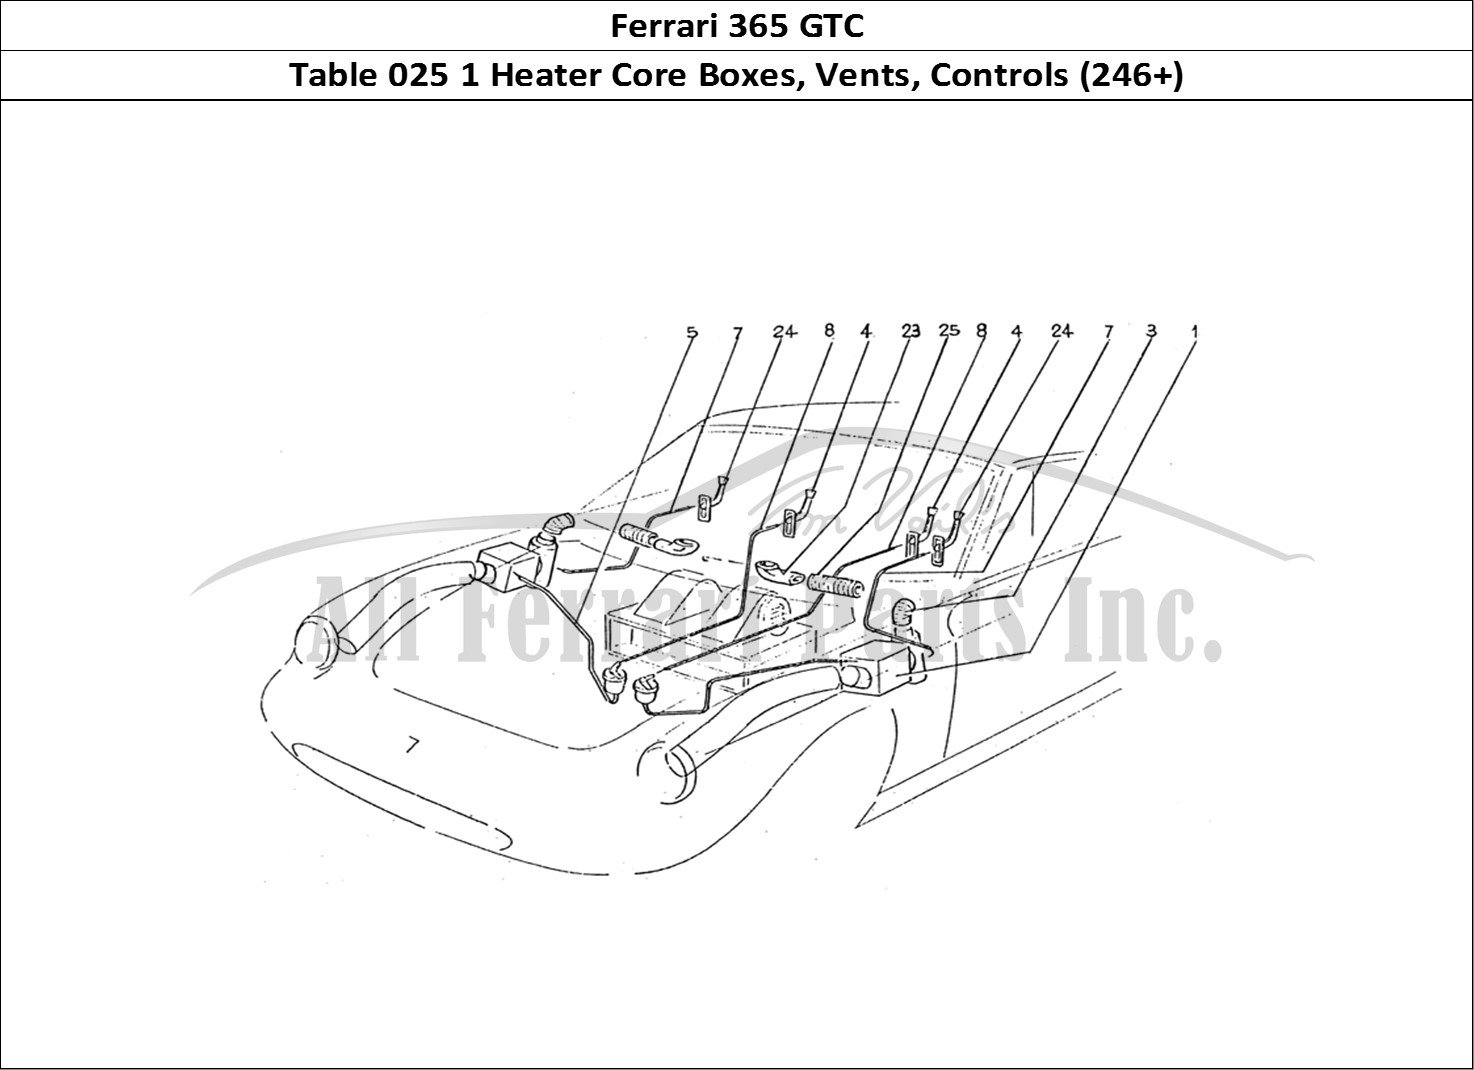 Ferrari Parts Ferrari 330 GTC (Coachwork) Page 025 Heating boxes (246+)